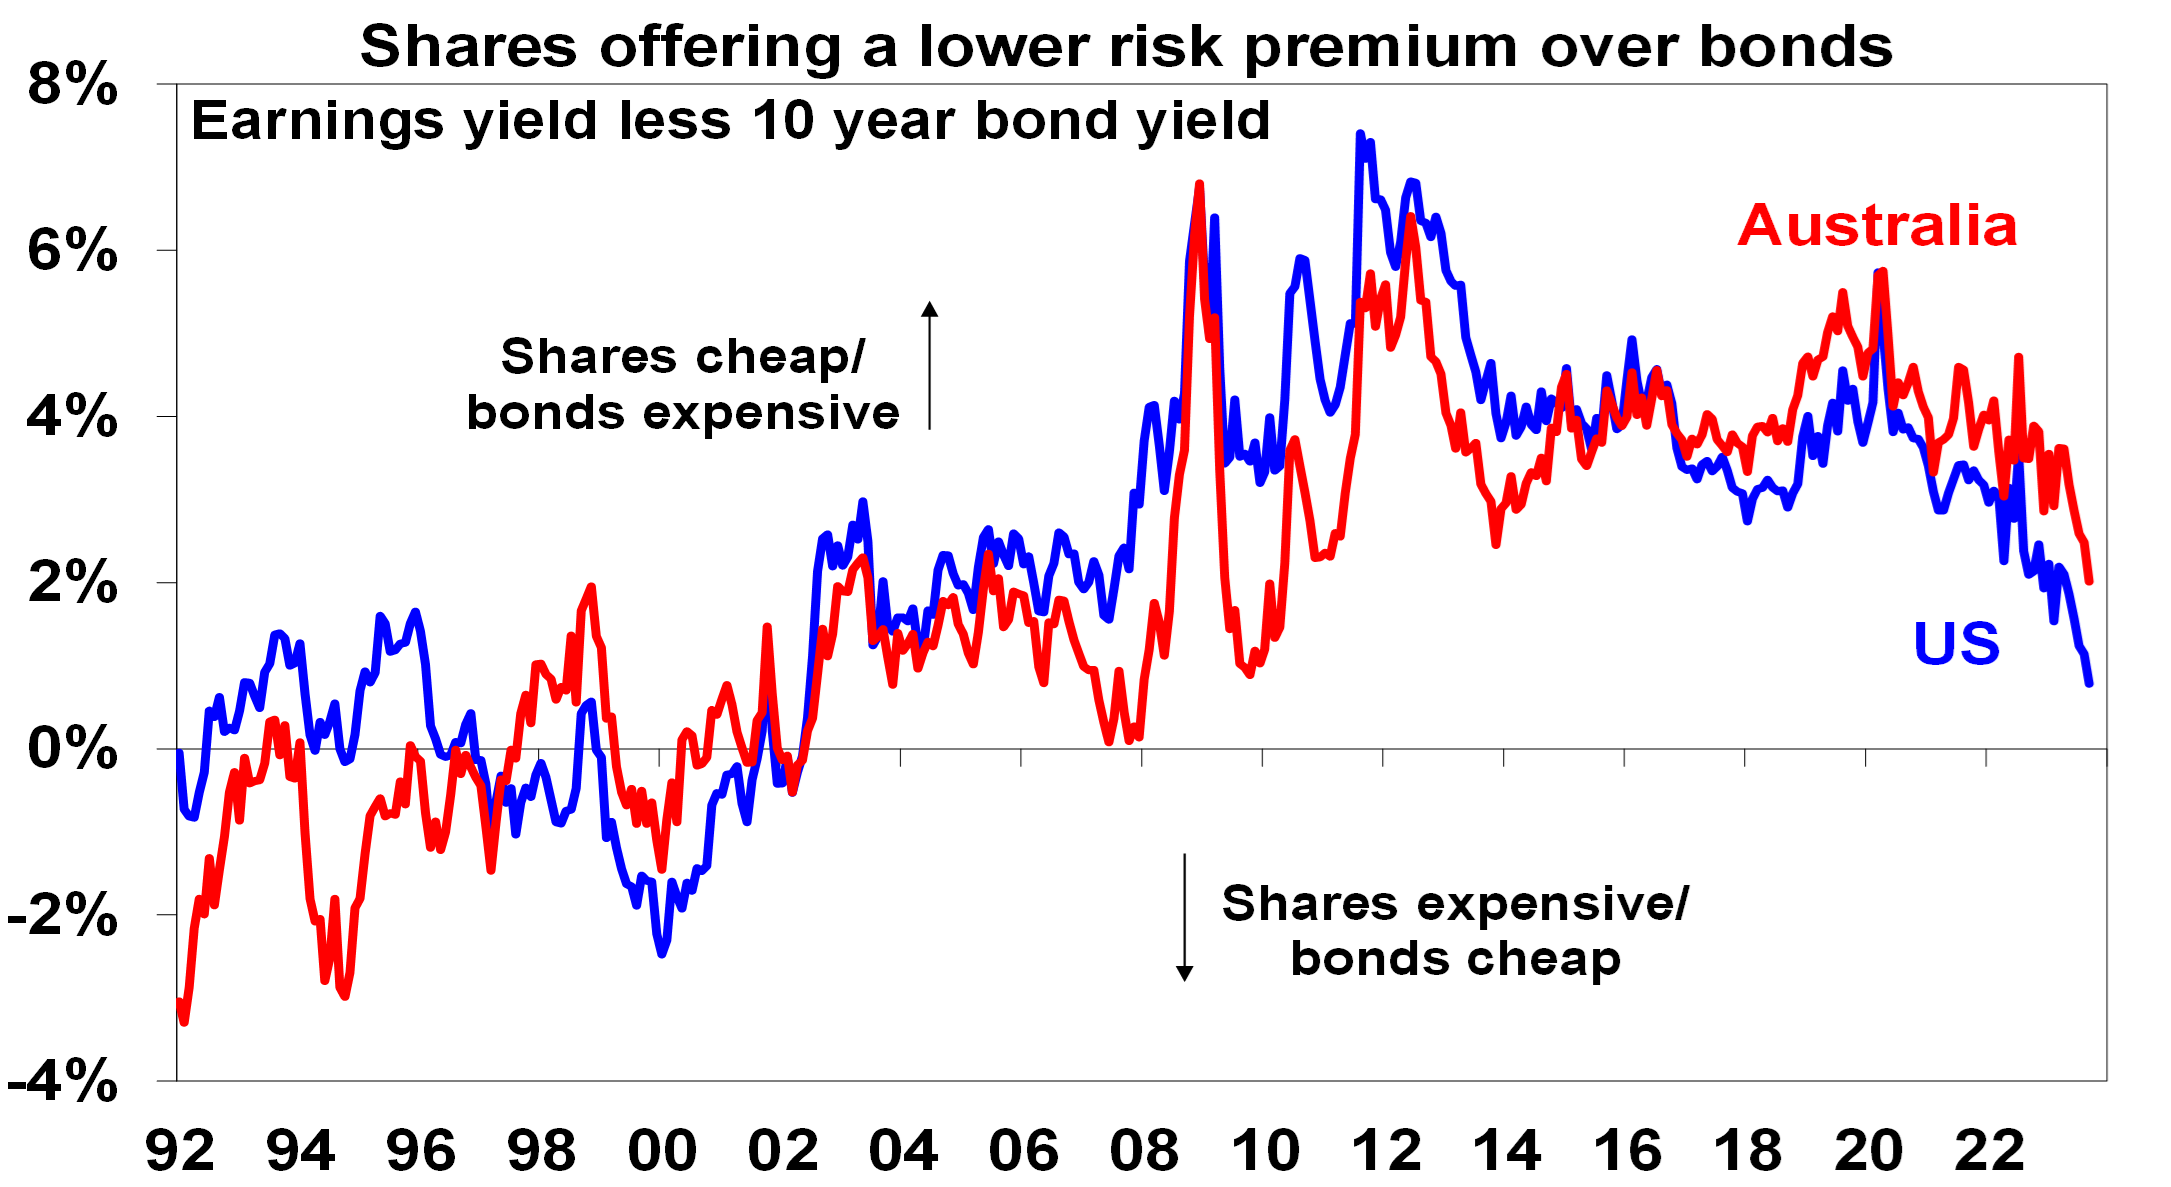 Shares offering a lower risk premium over bonds